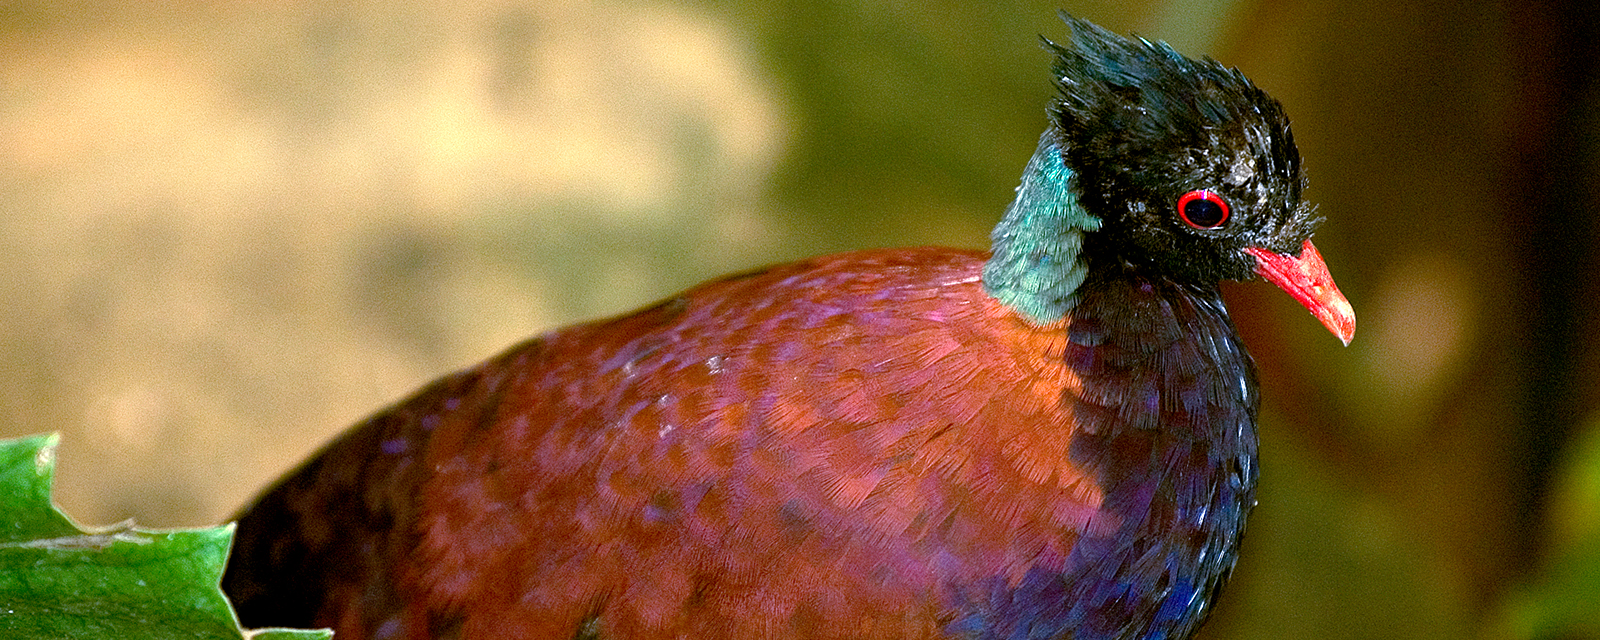 Green-naped pheasant pigeon in exhibit